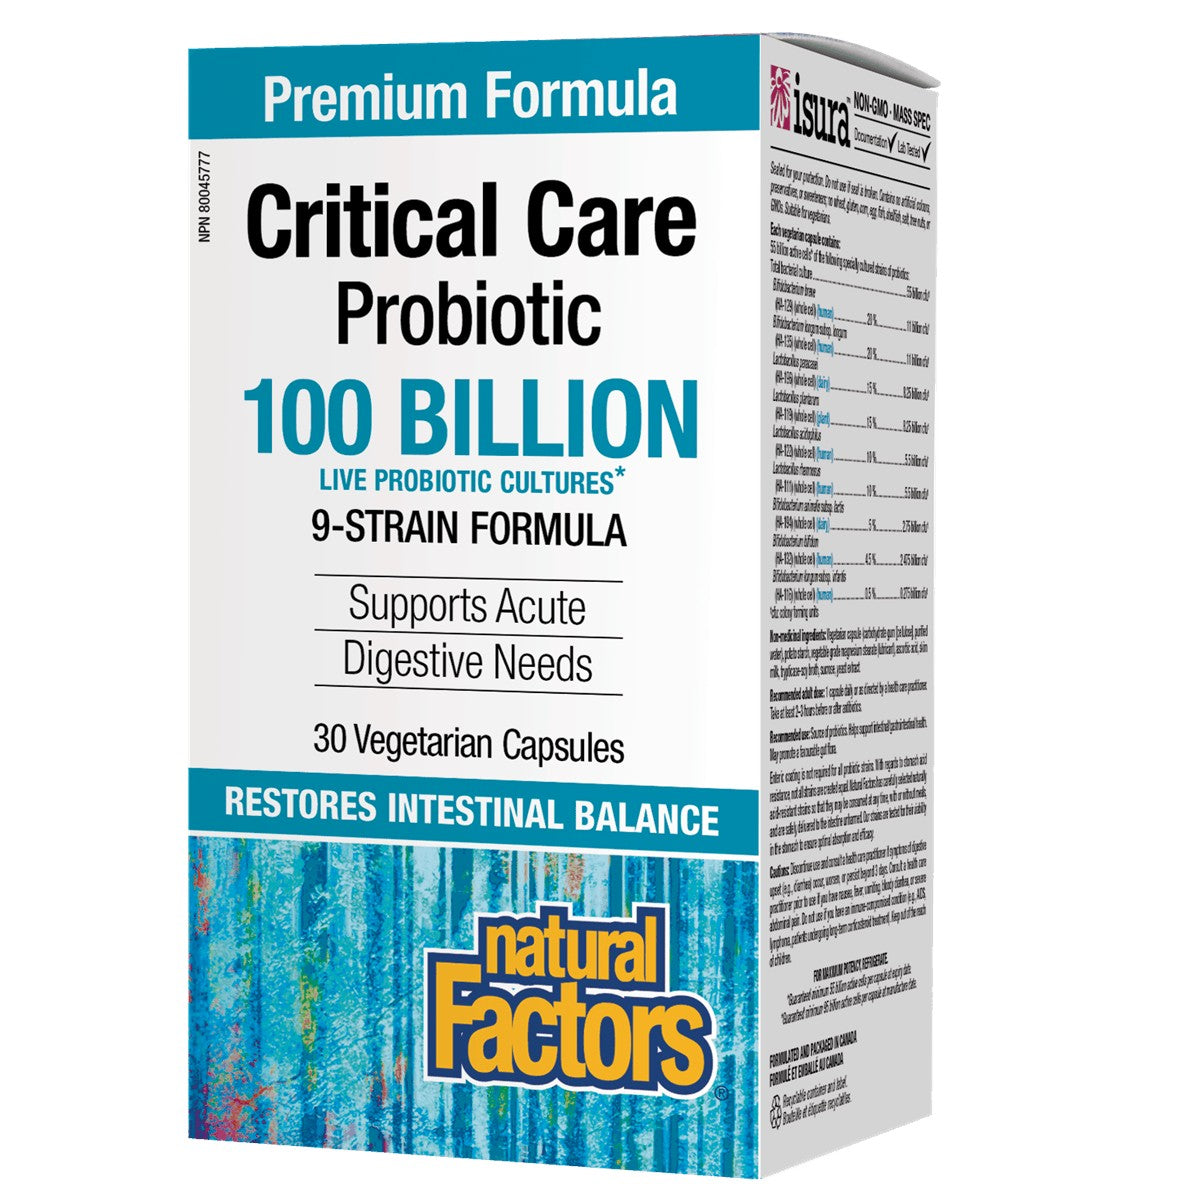 Natural Factors Premium Formula Critical Care Probiotic 100 Billion Active Cells 30 Vegetarian Capsules